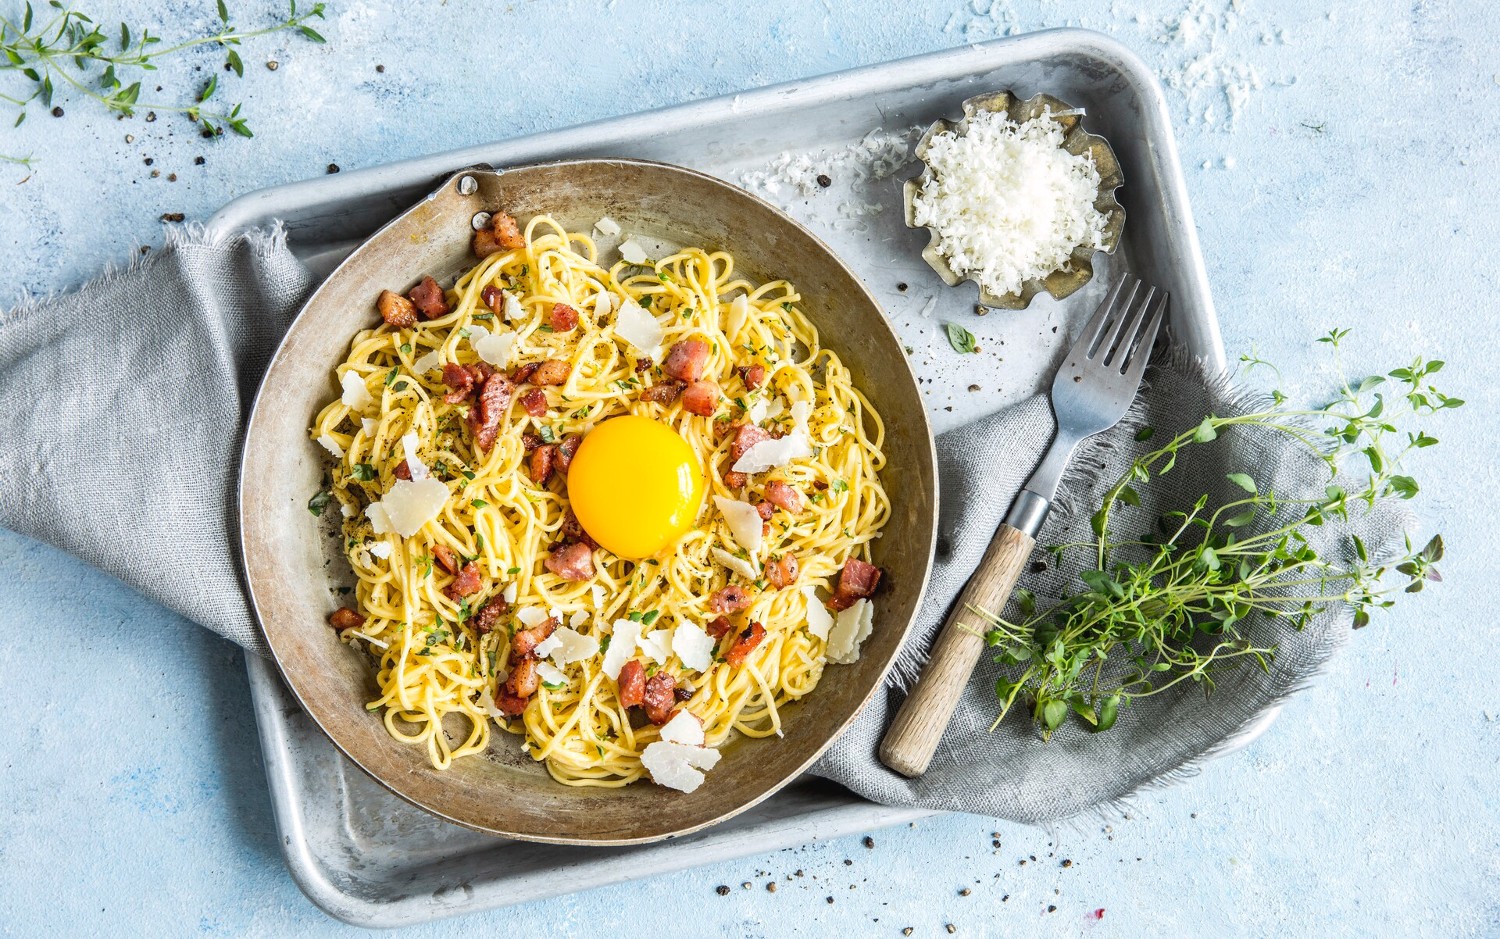 En tallerken med pasta carbonara med en eggeplomme i midten.